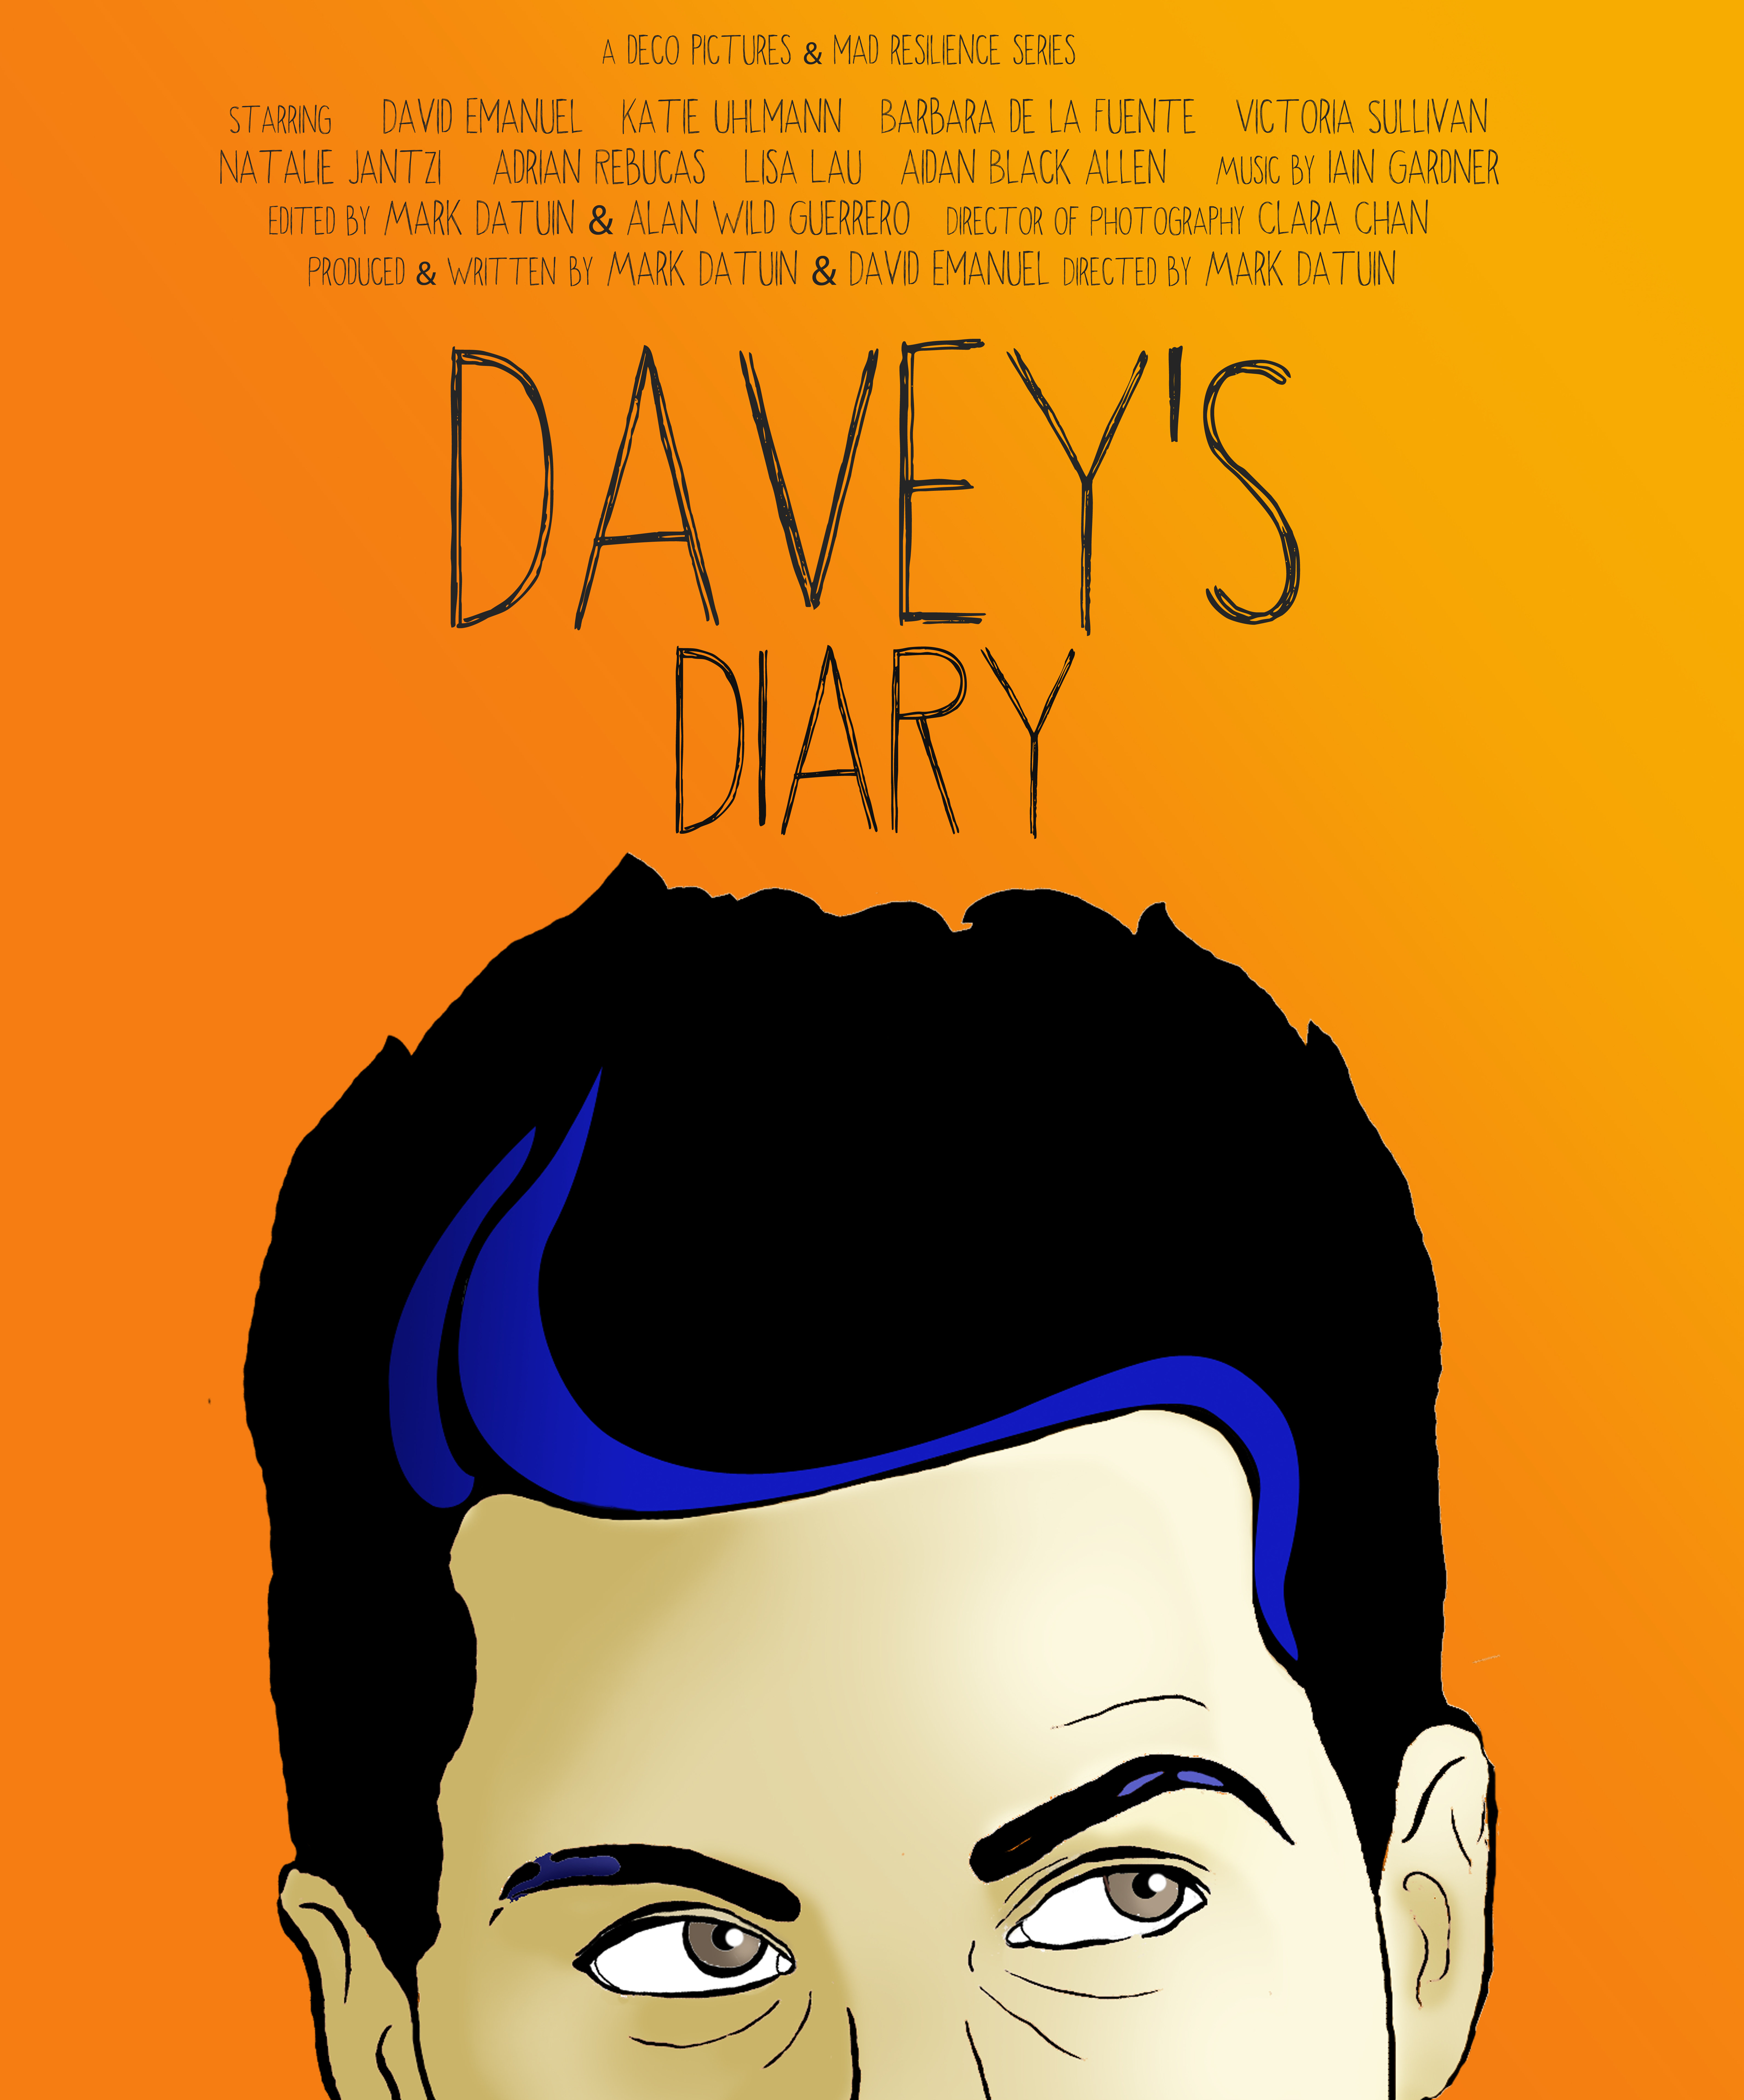 Davey's Diary